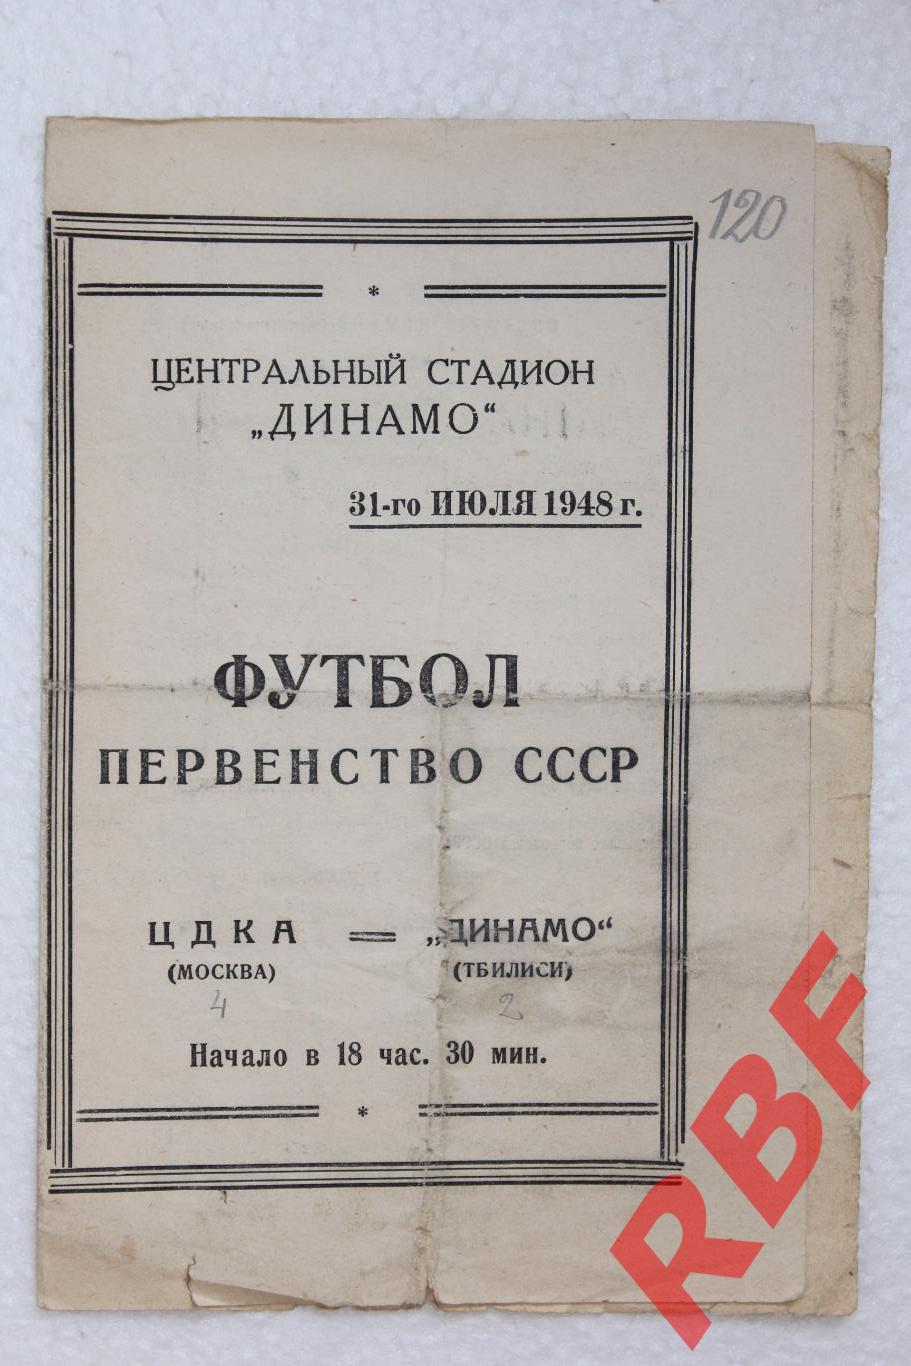 ЦДКА (Москва) - Динамо (Тбилиси),31 июля 1948